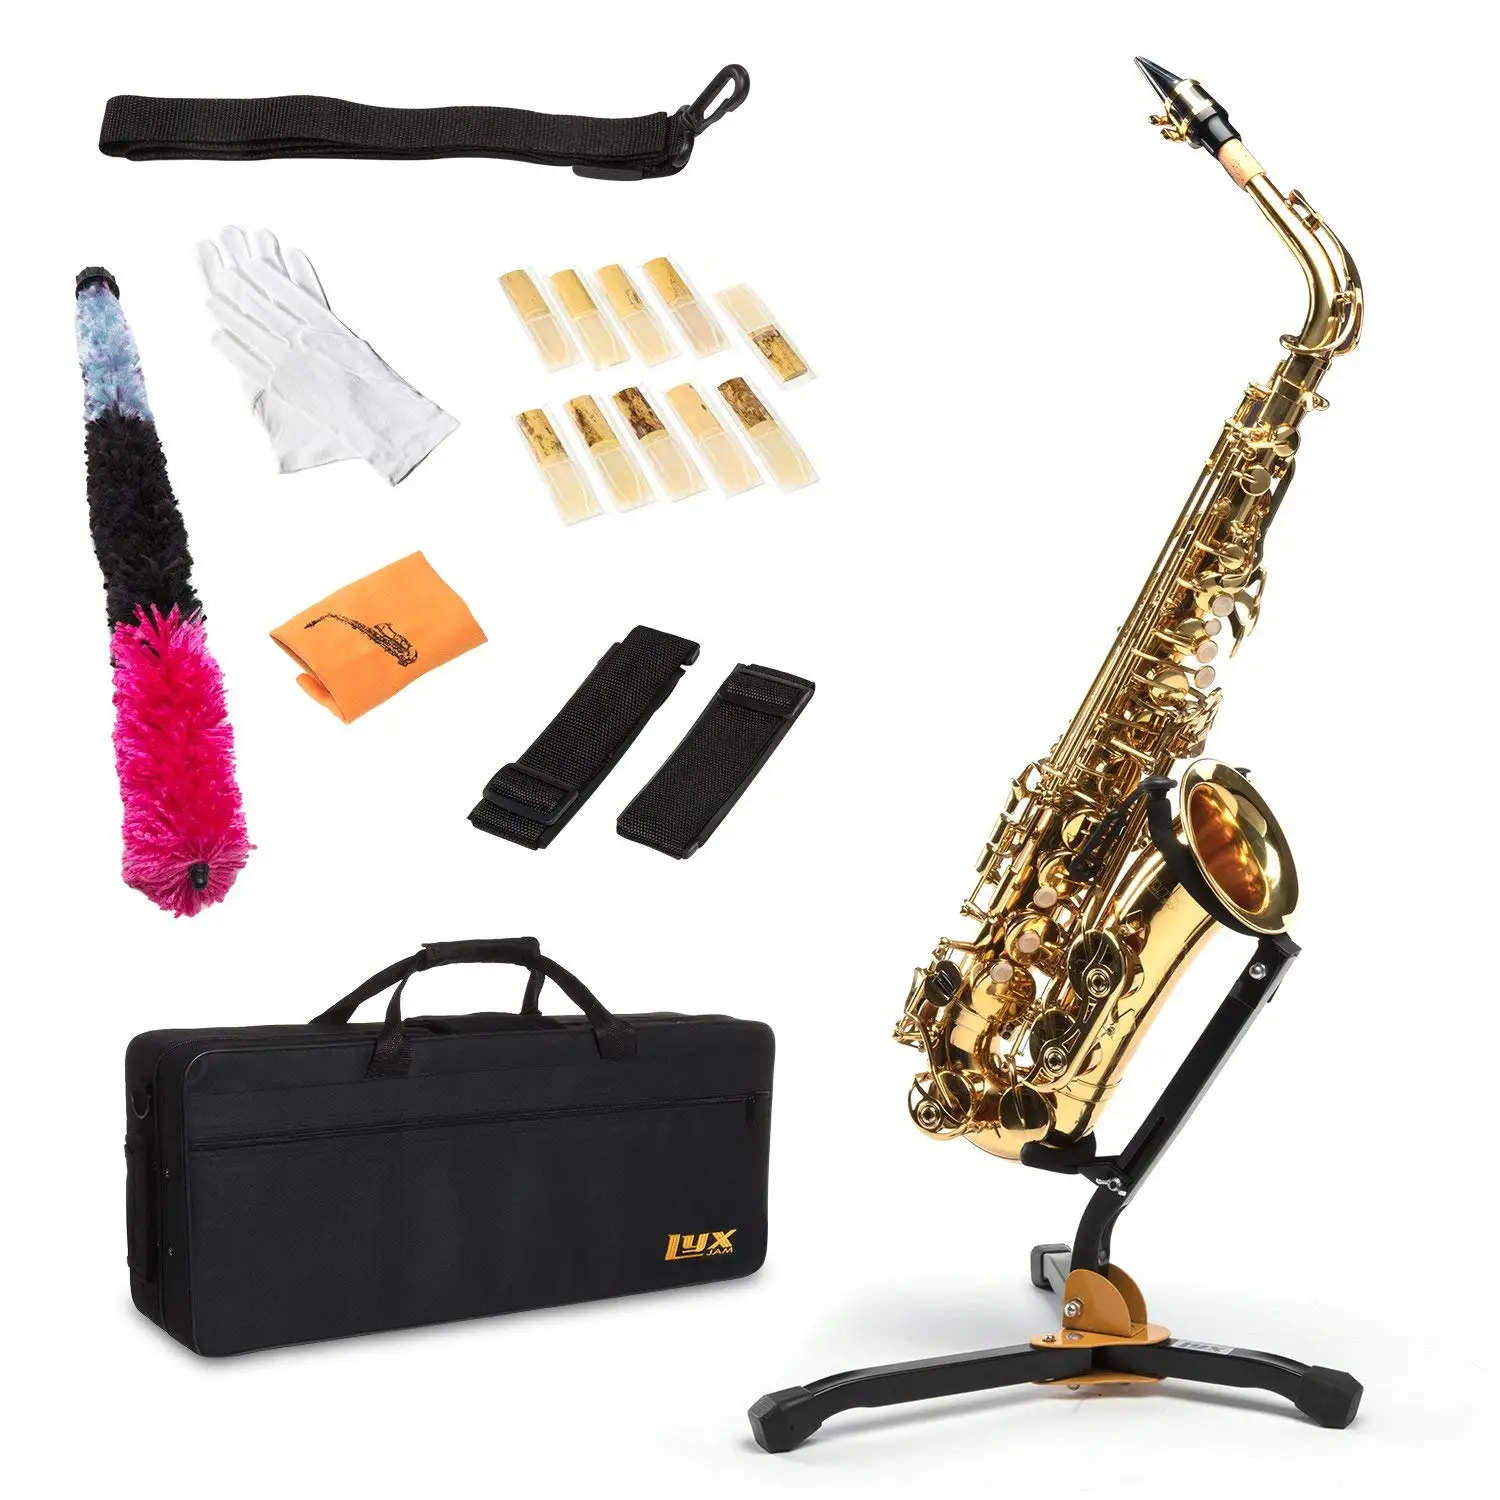 B Blesiya 2 Pack Saxophone Thumb Rest Cushion Pad for Wind Instrument Parts